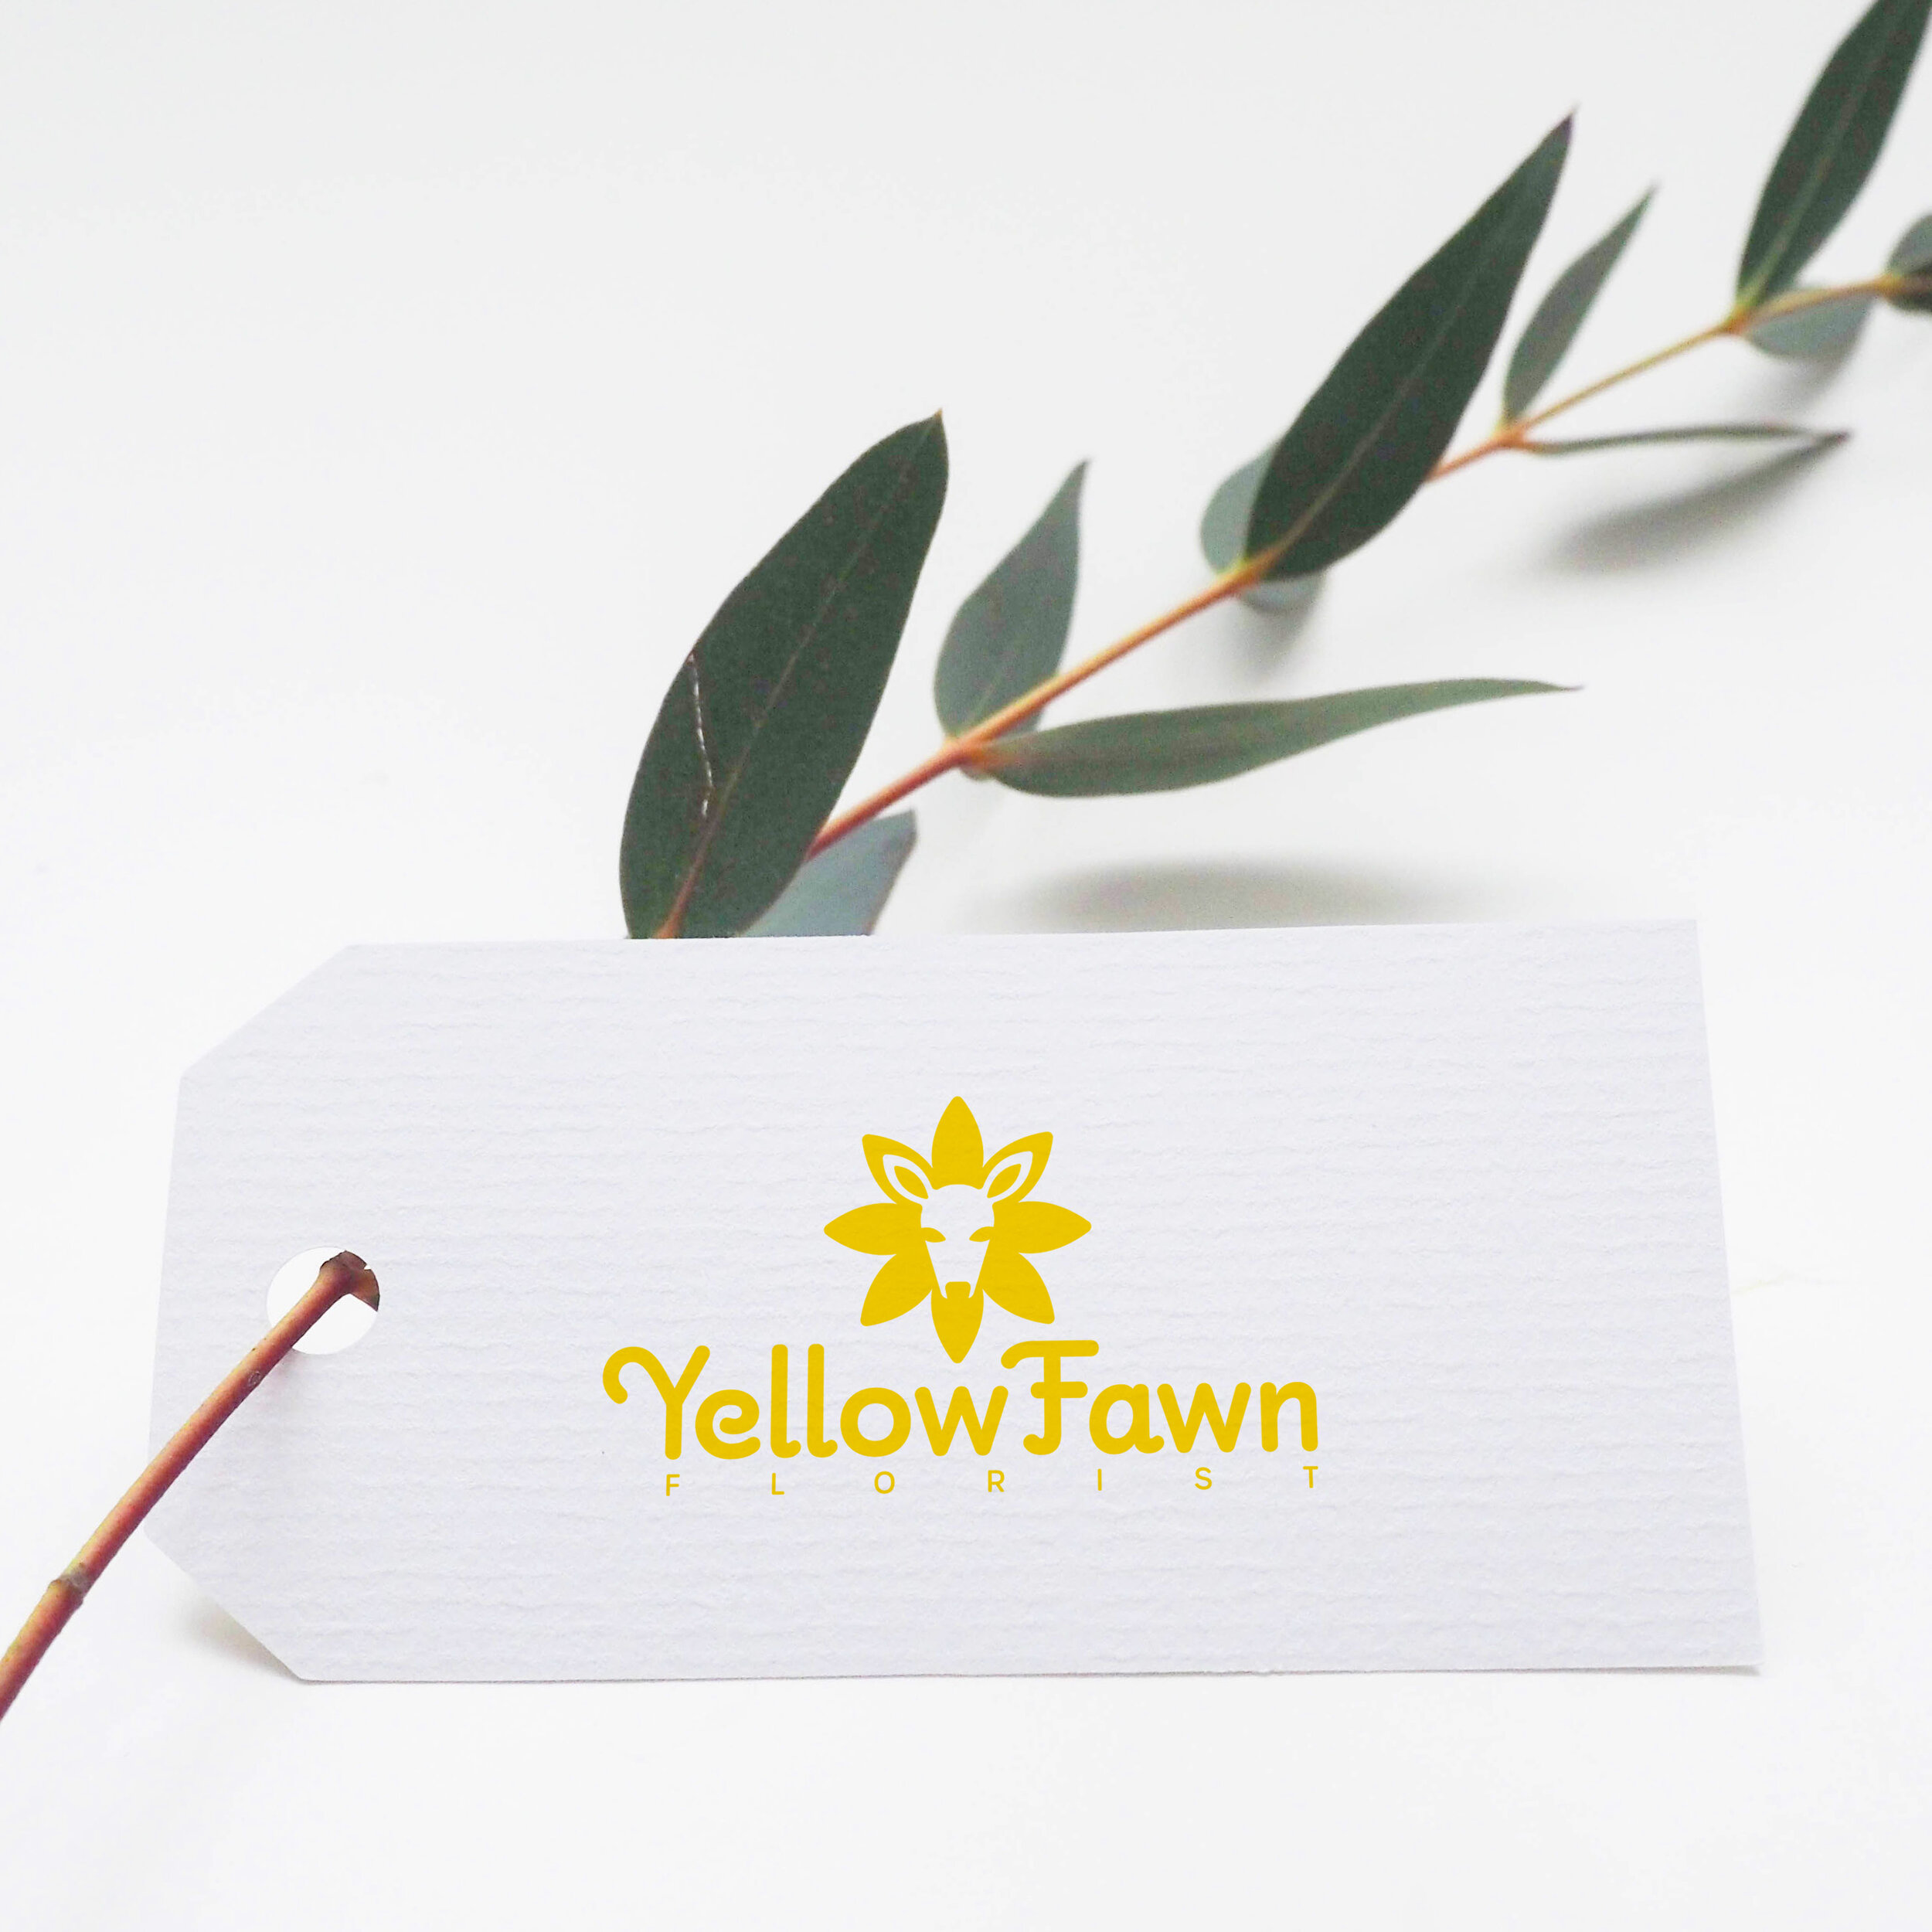 Brand Case Study: Yellow Fawn Florist — PRESUTTI DESIGN